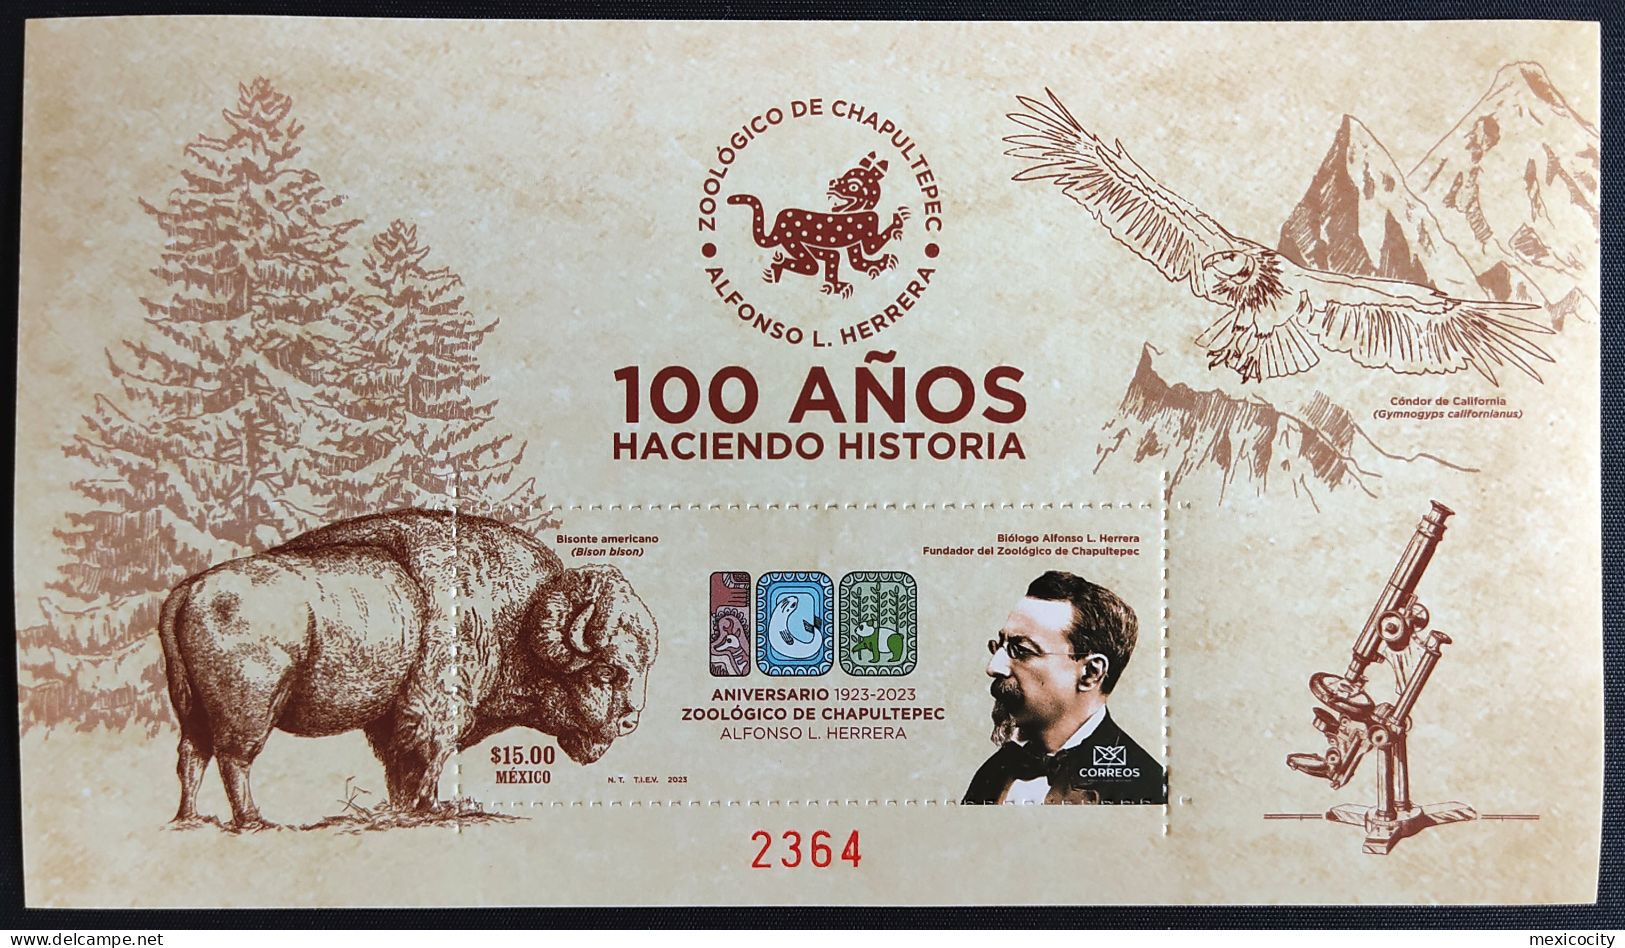 MEXICO 2023 CHAP. ZOO Anniv. LTD. DIAMANTÉ BLOC COLLECTORS Mint NH Unm., Rare, Few Offered To Sell - México